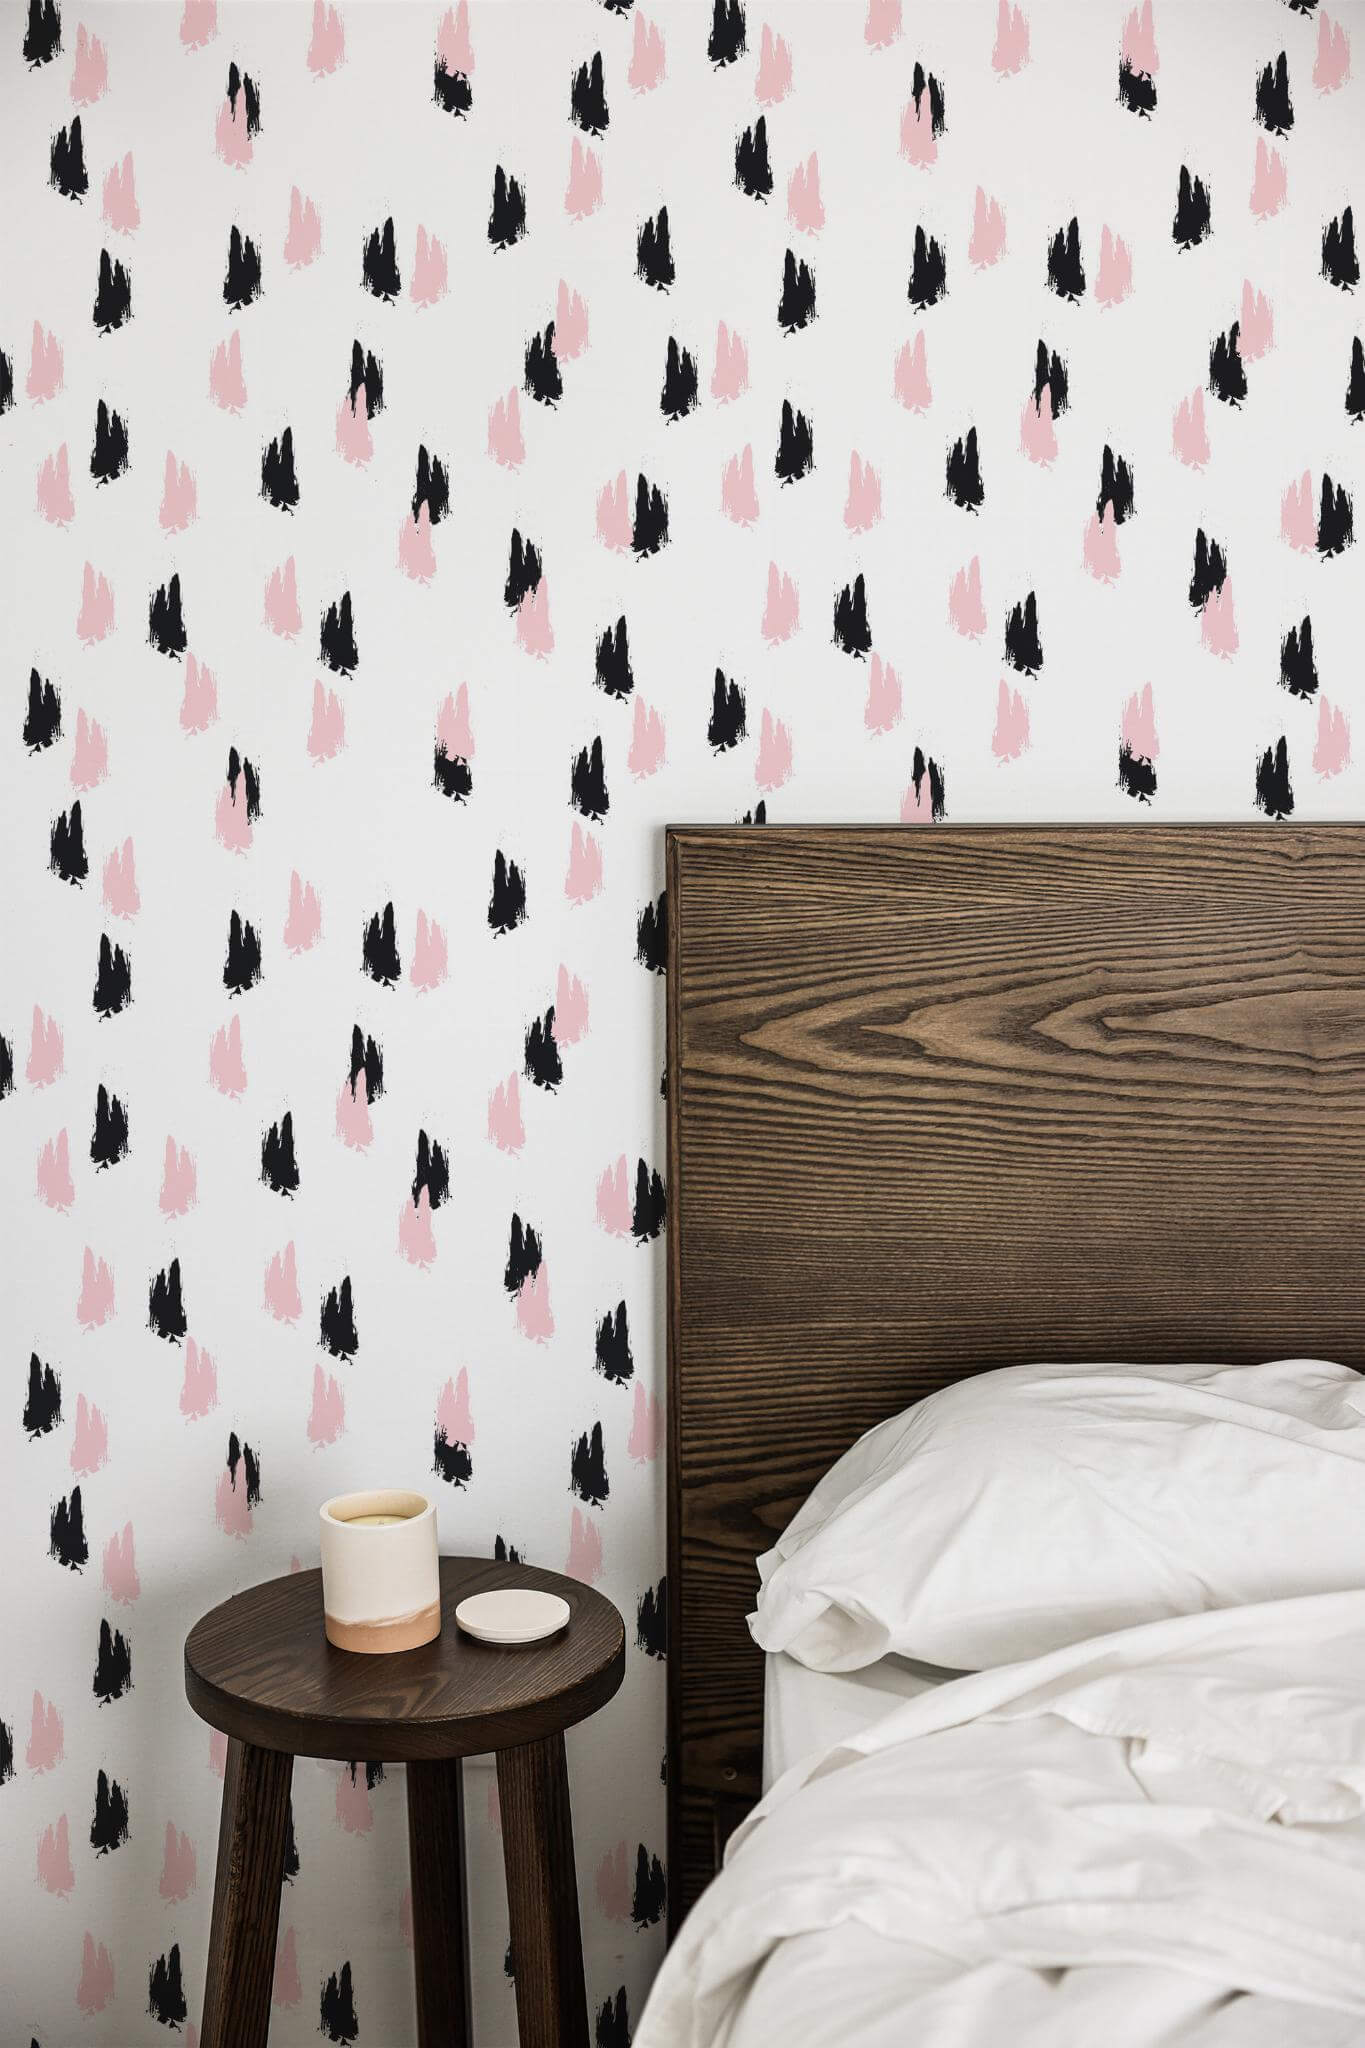 Pink Cheetah Print Peel and Stick Wallpaper Sample - 19′′x19′′, PVC-Free